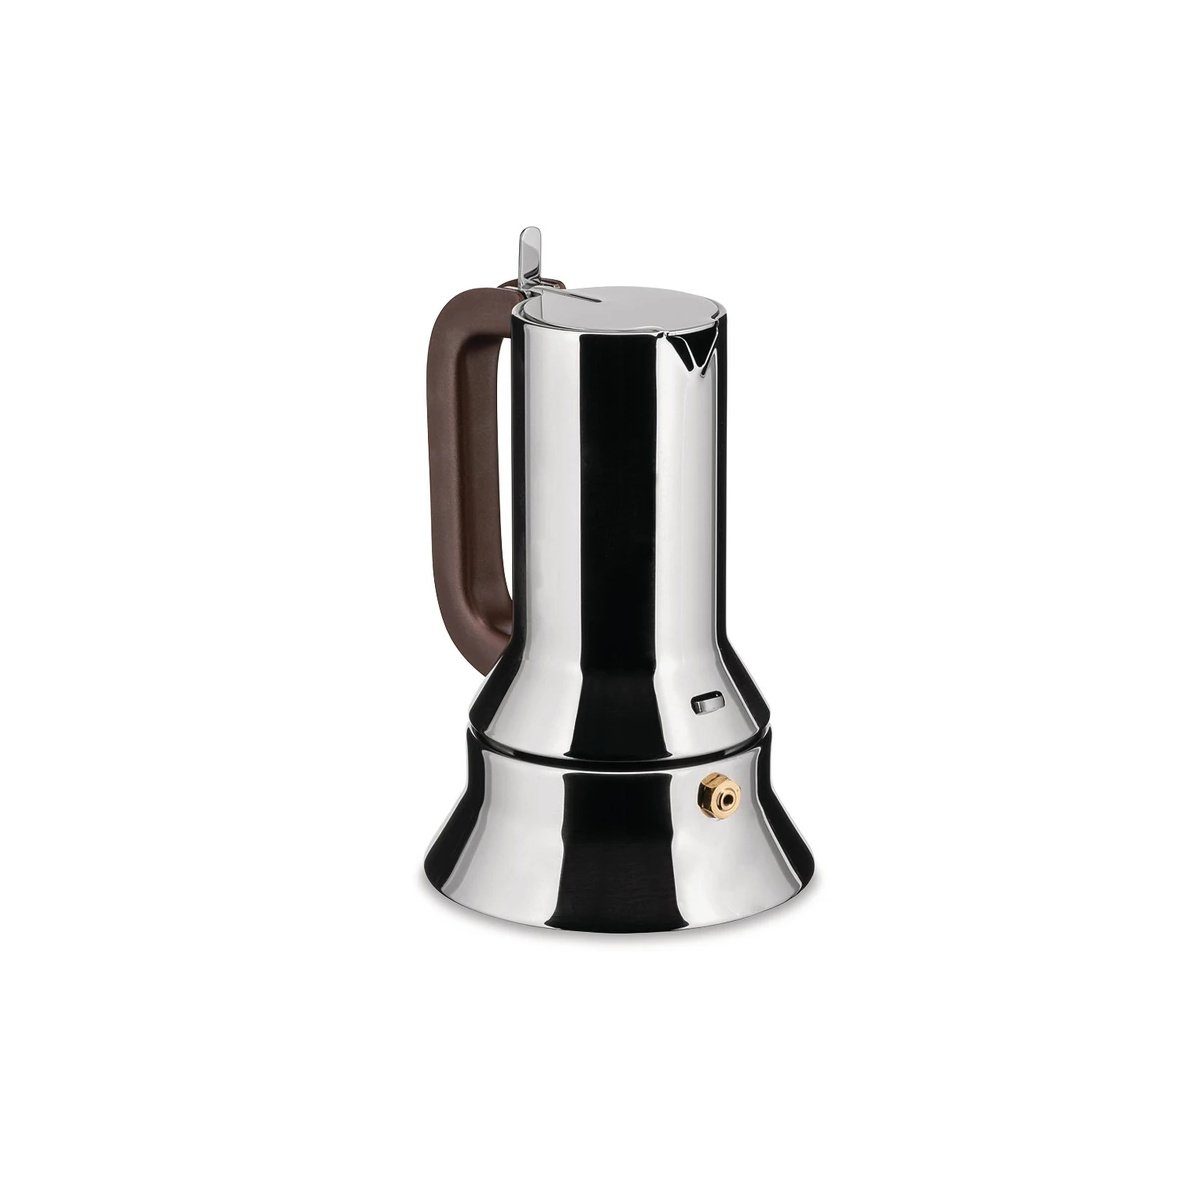 3-6 Für 30cl, SAPPER Espressokocher 0.3l Espressokocher Kaffeekanne, Alessi Tassen Espresso